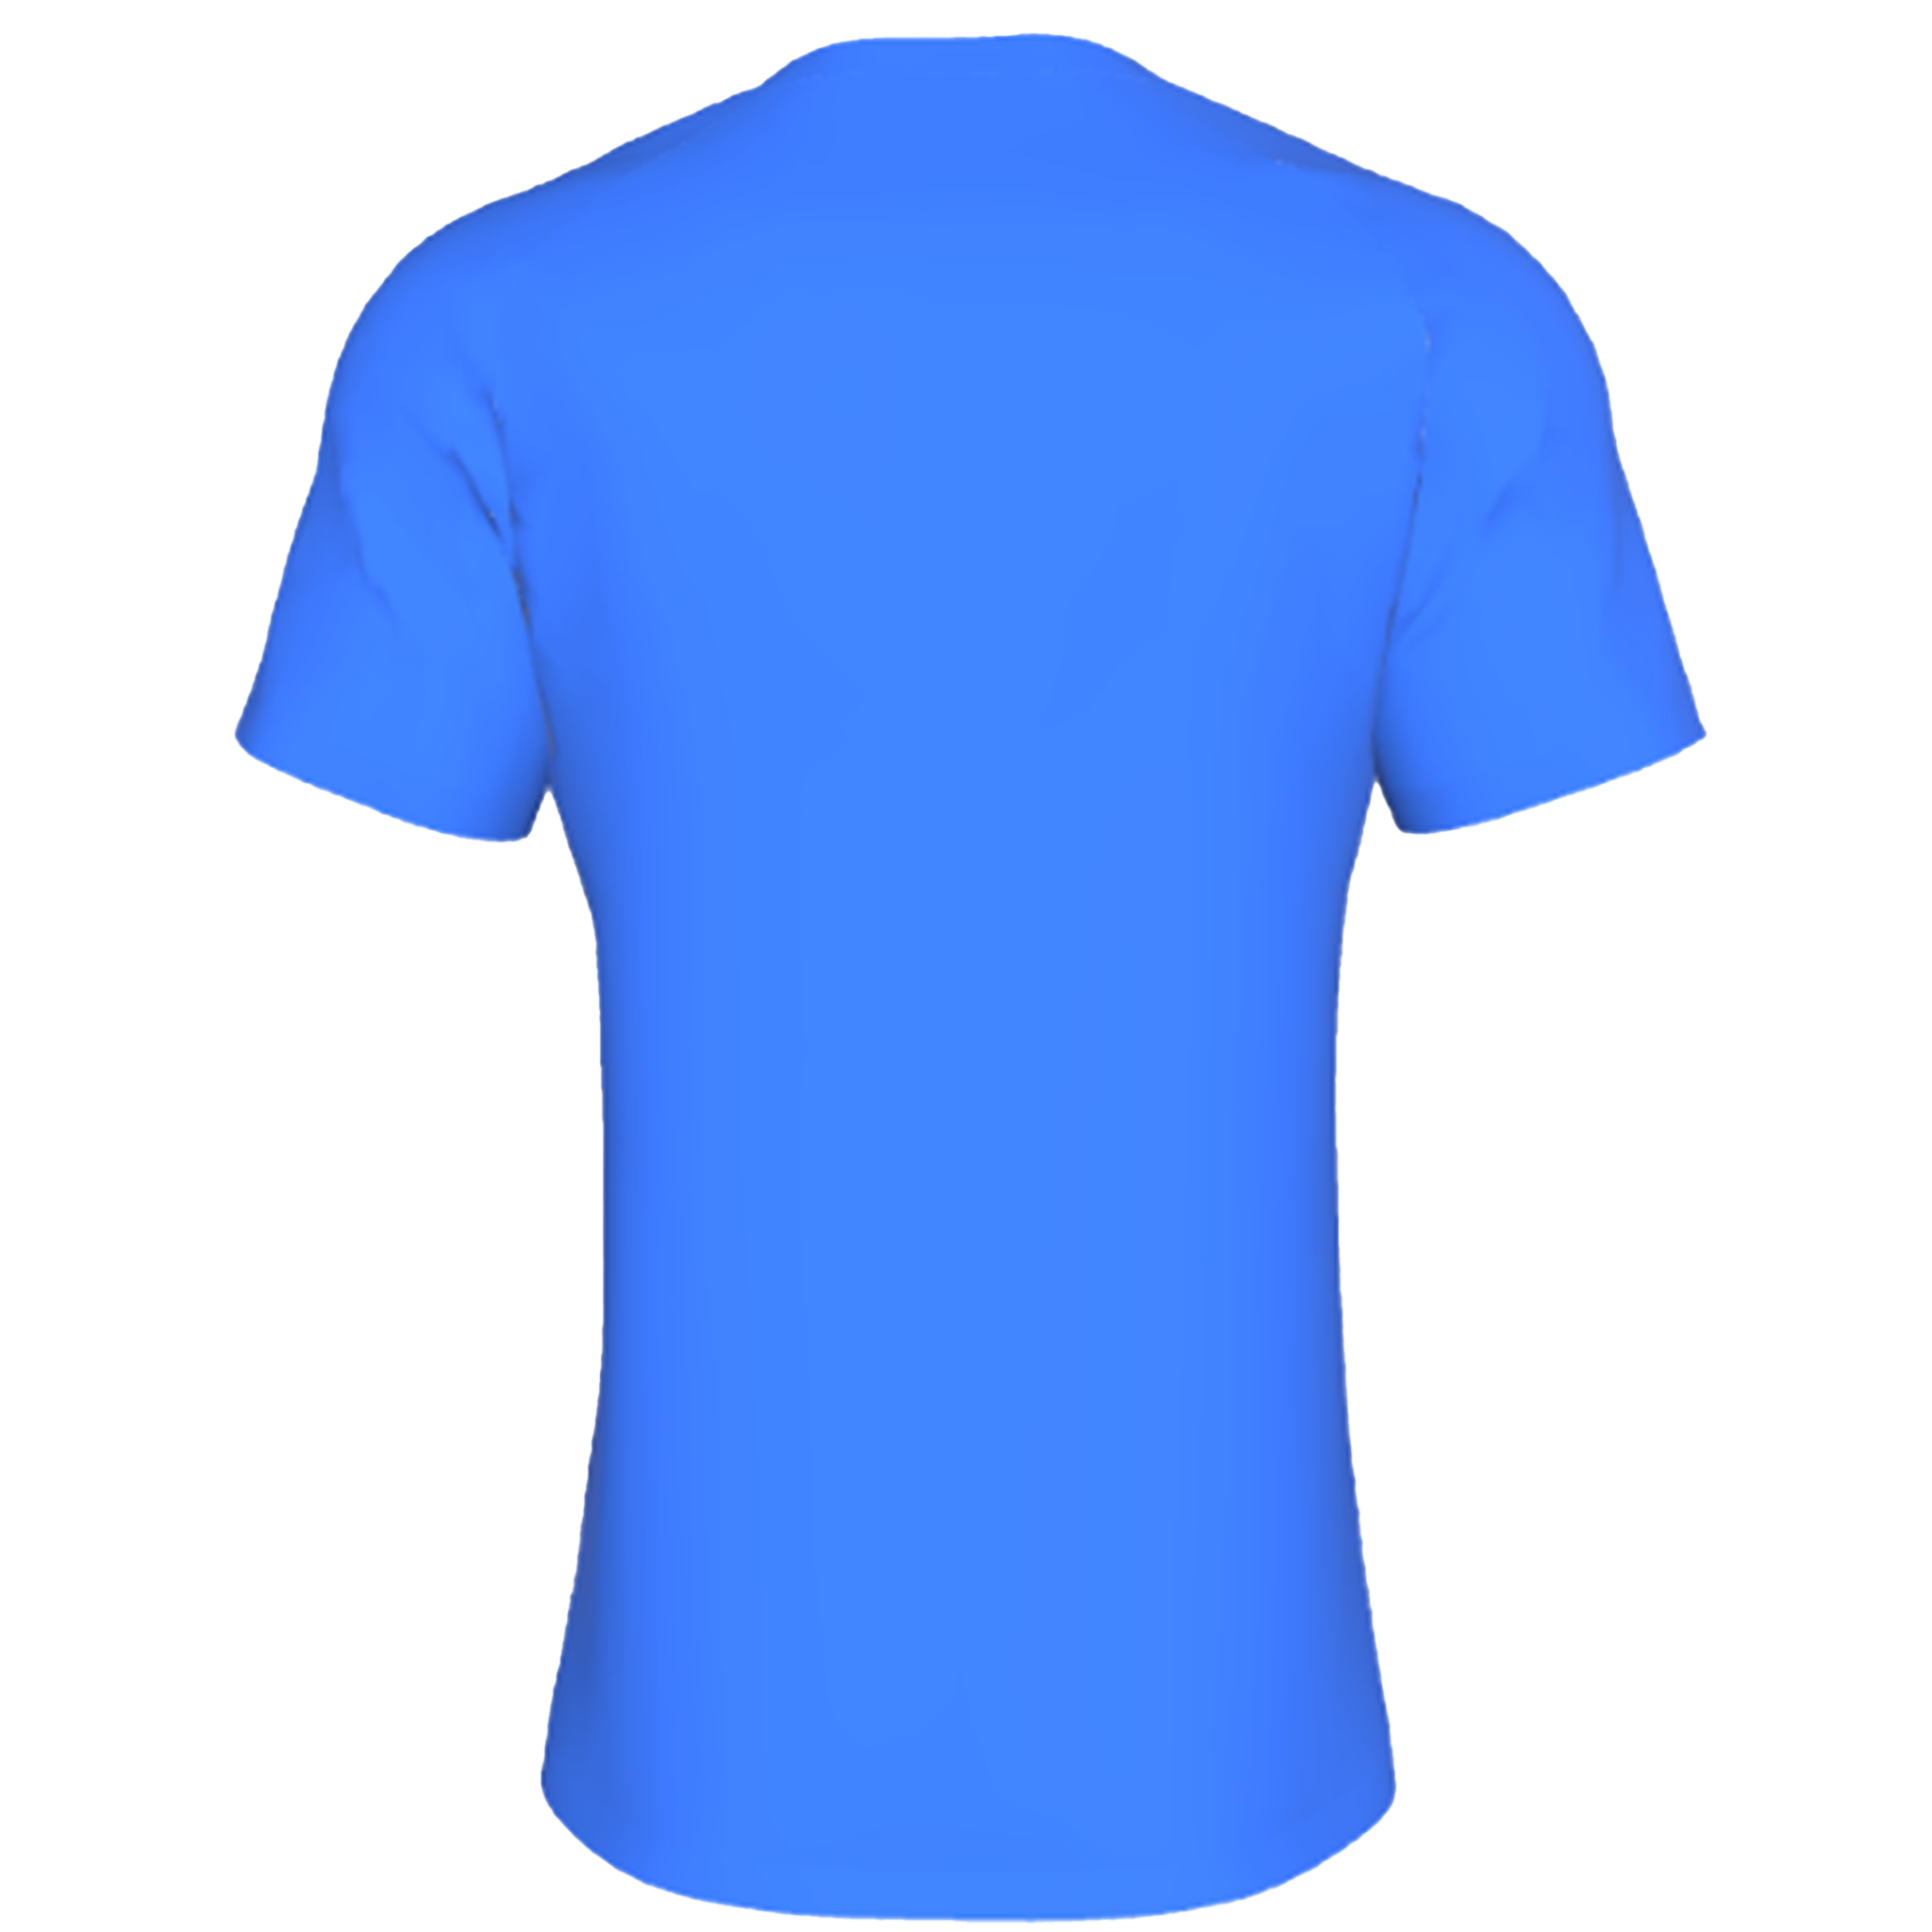 Custom T-Shirt - Back - Men's/Women's/Youth - Custom colors